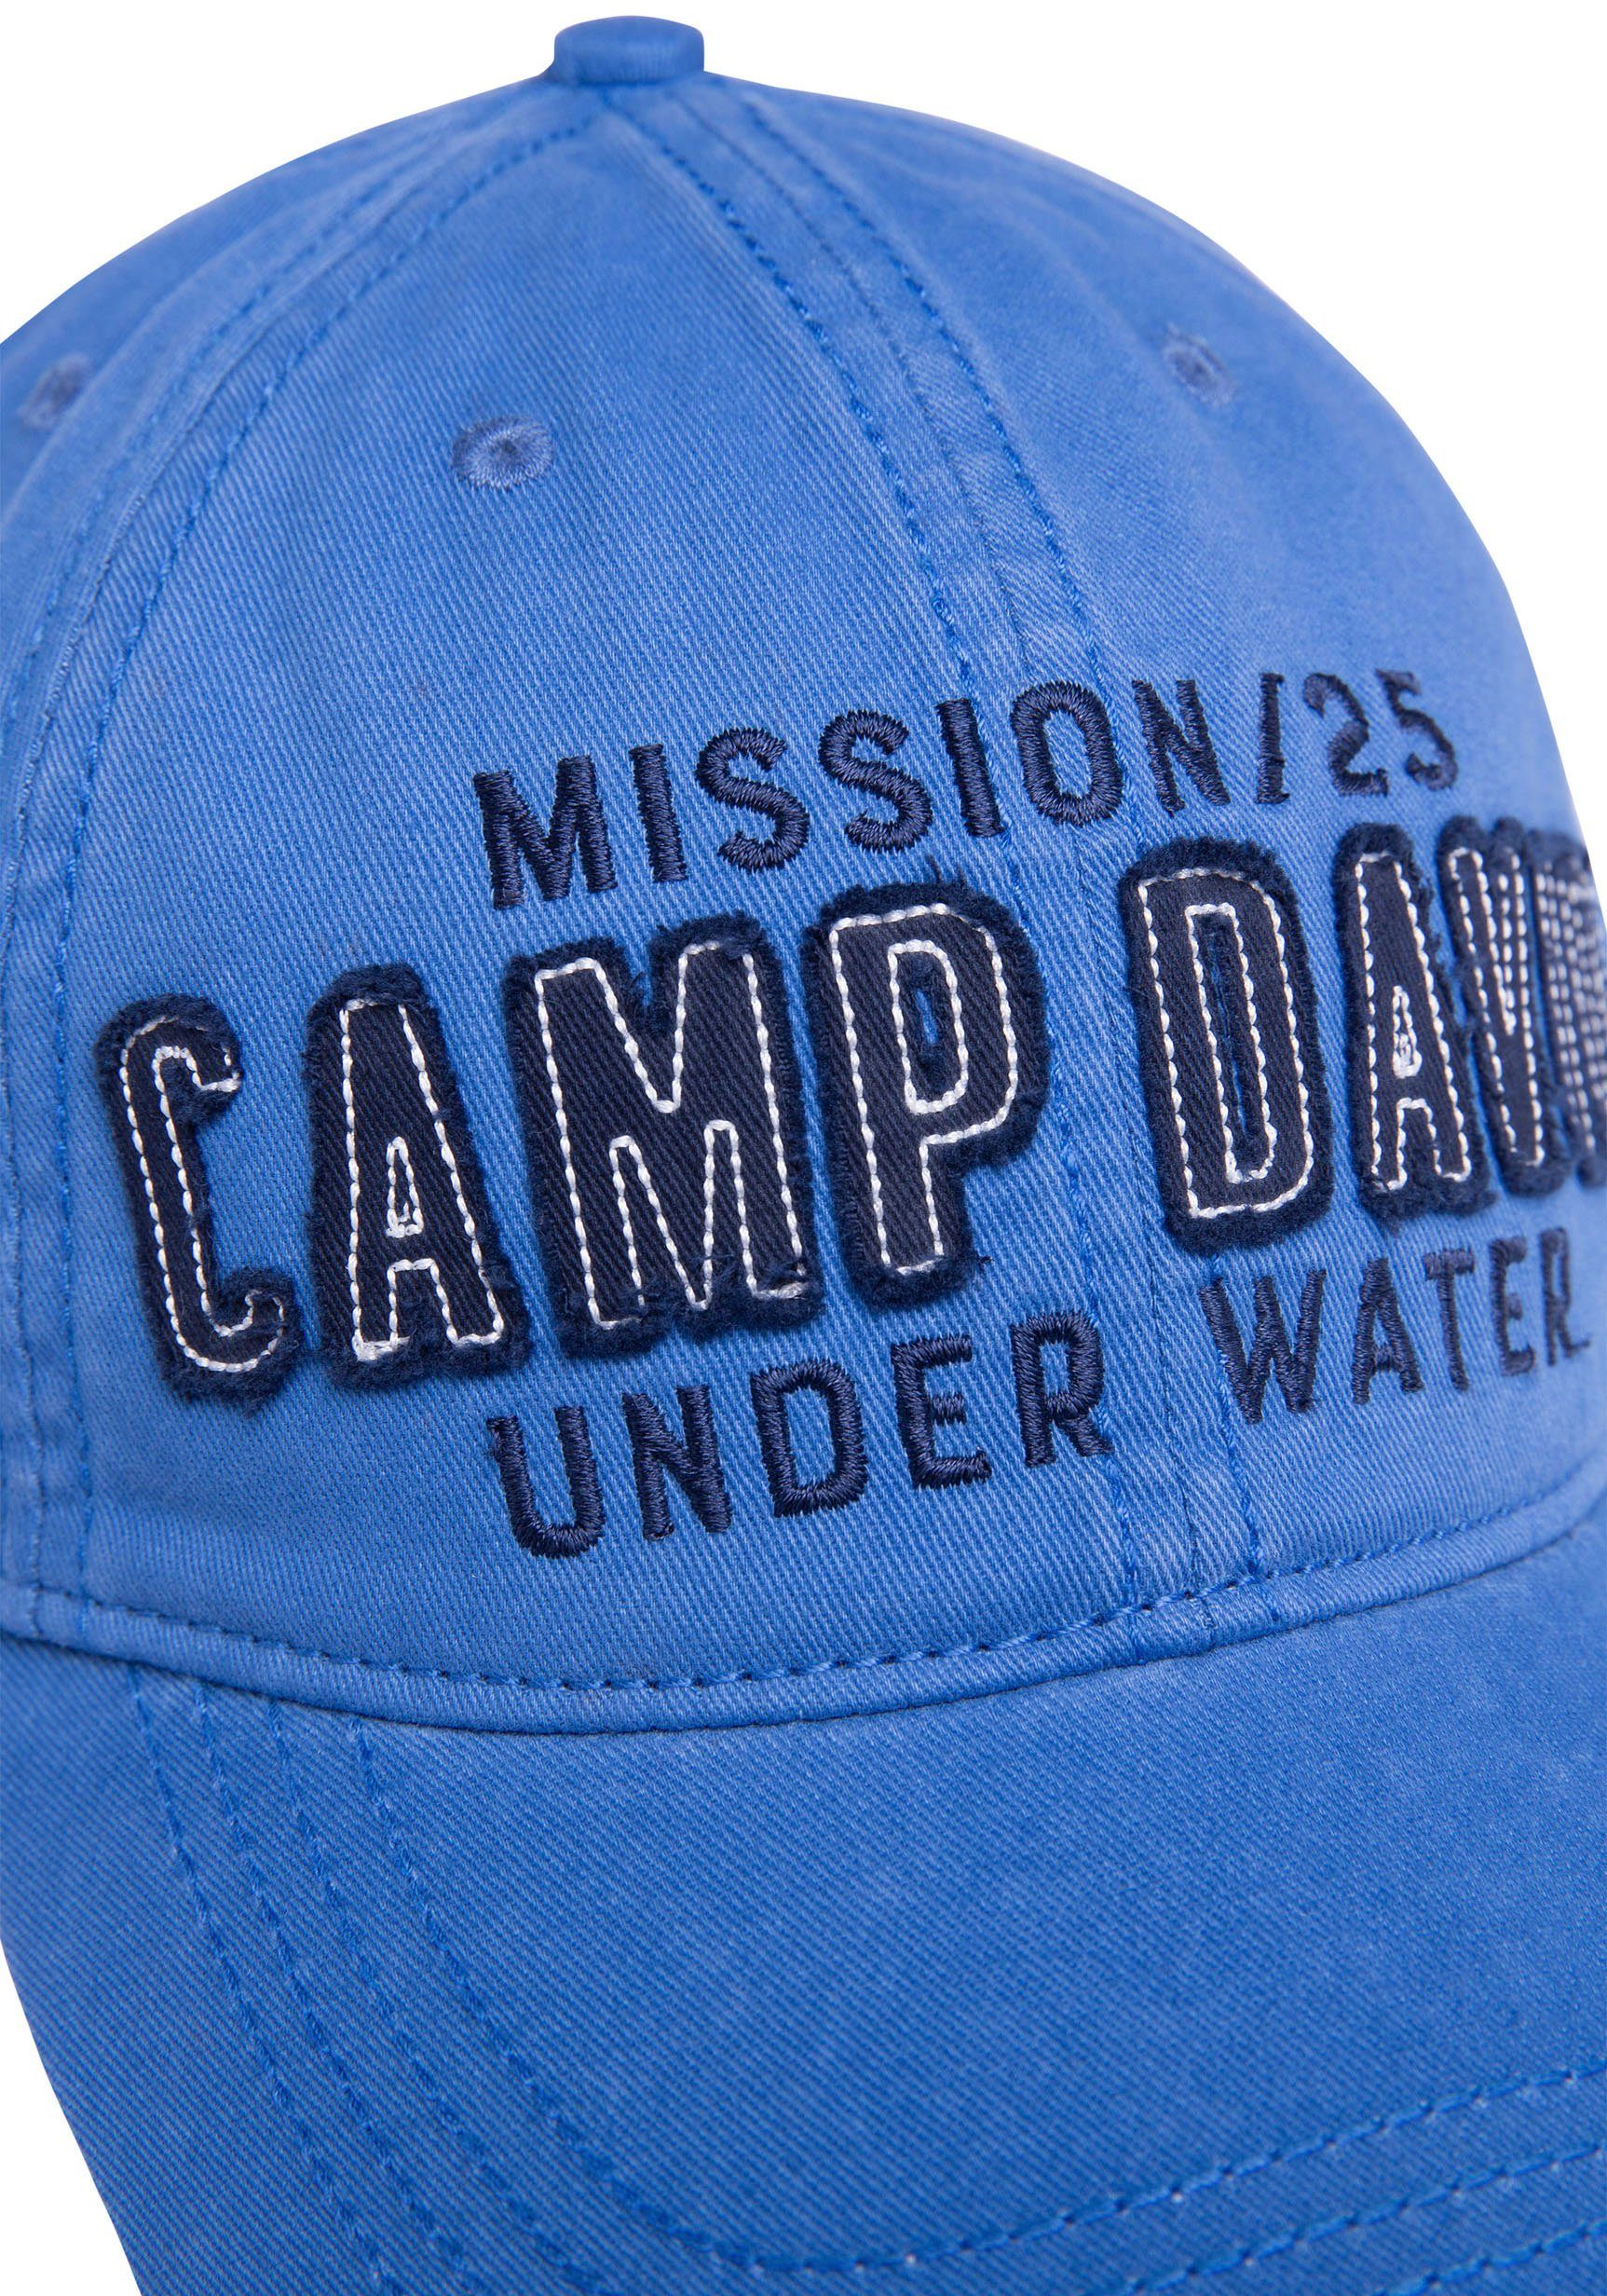 Cap mit gewaschener DAVID Optik blue Baseball pacific CAMP